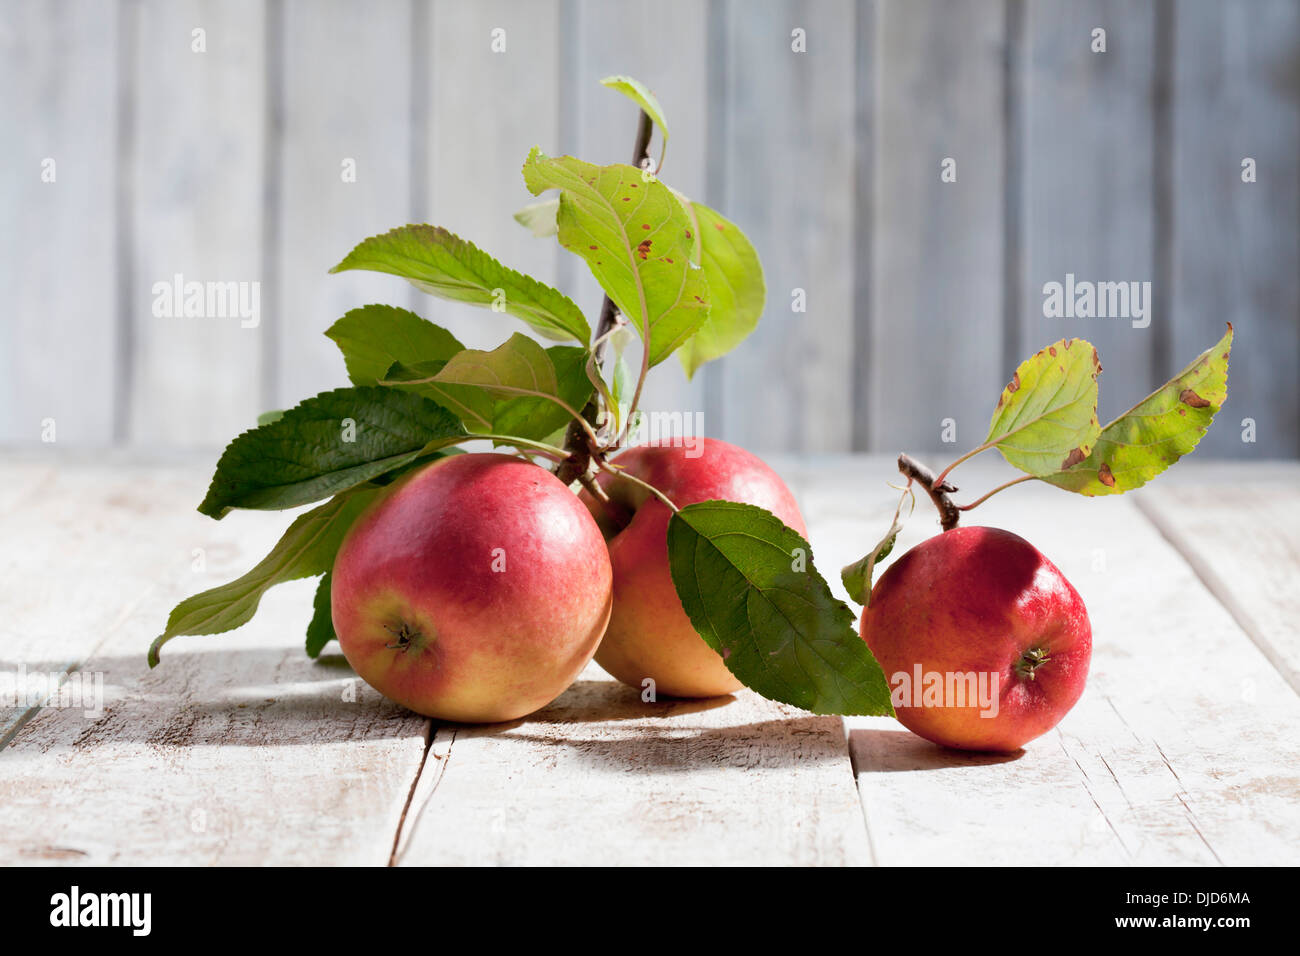 https://c8.alamy.com/comp/DJD6MA/organic-apples-on-twig-DJD6MA.jpg